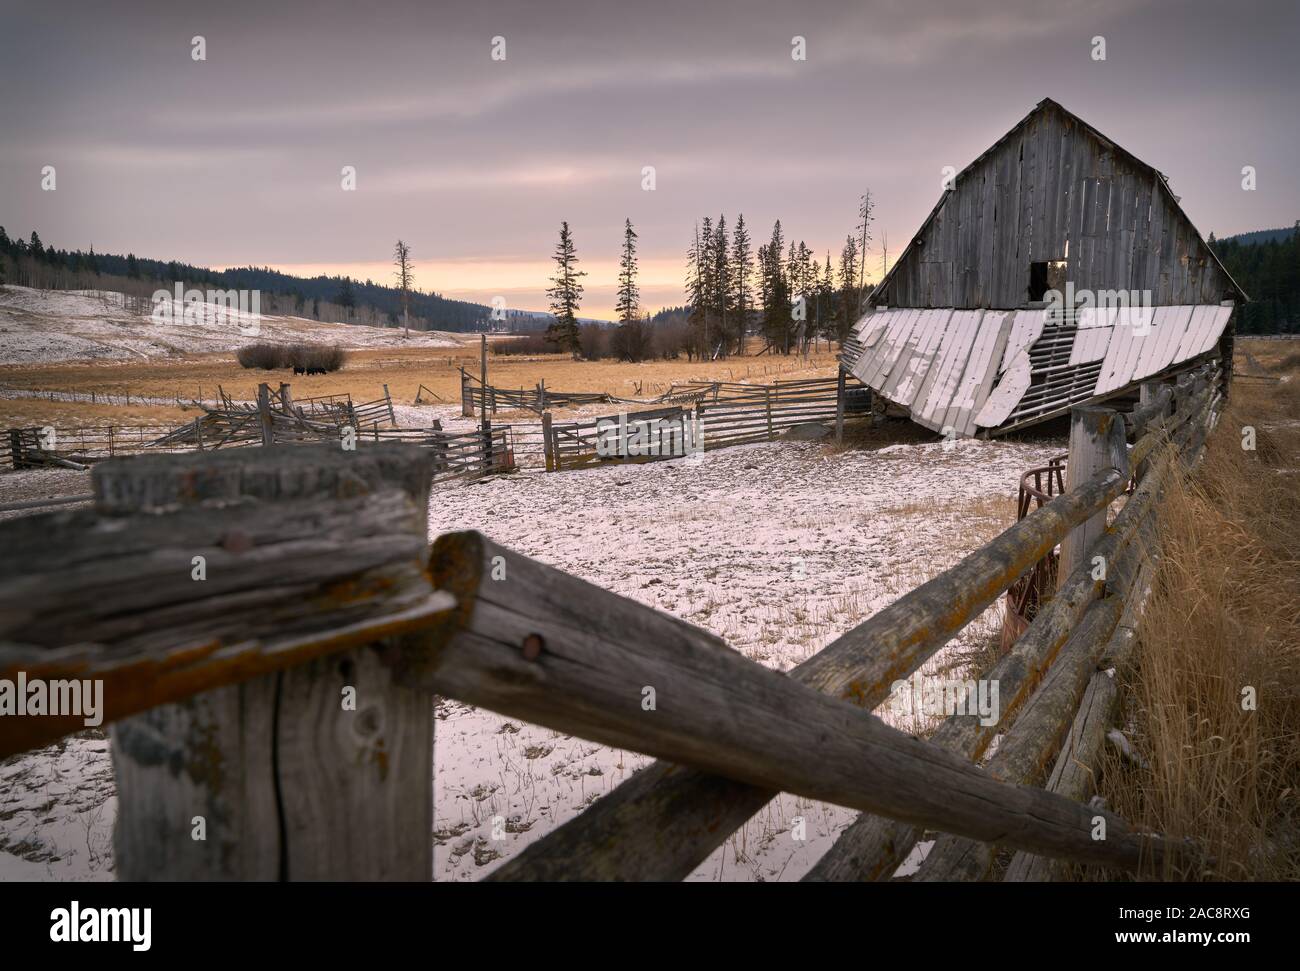 Inverno Ranch Nicola Valley Merritt. Un vecchio fienile spiovente in Nicola Valley, British Columbia, Canada. Foto Stock